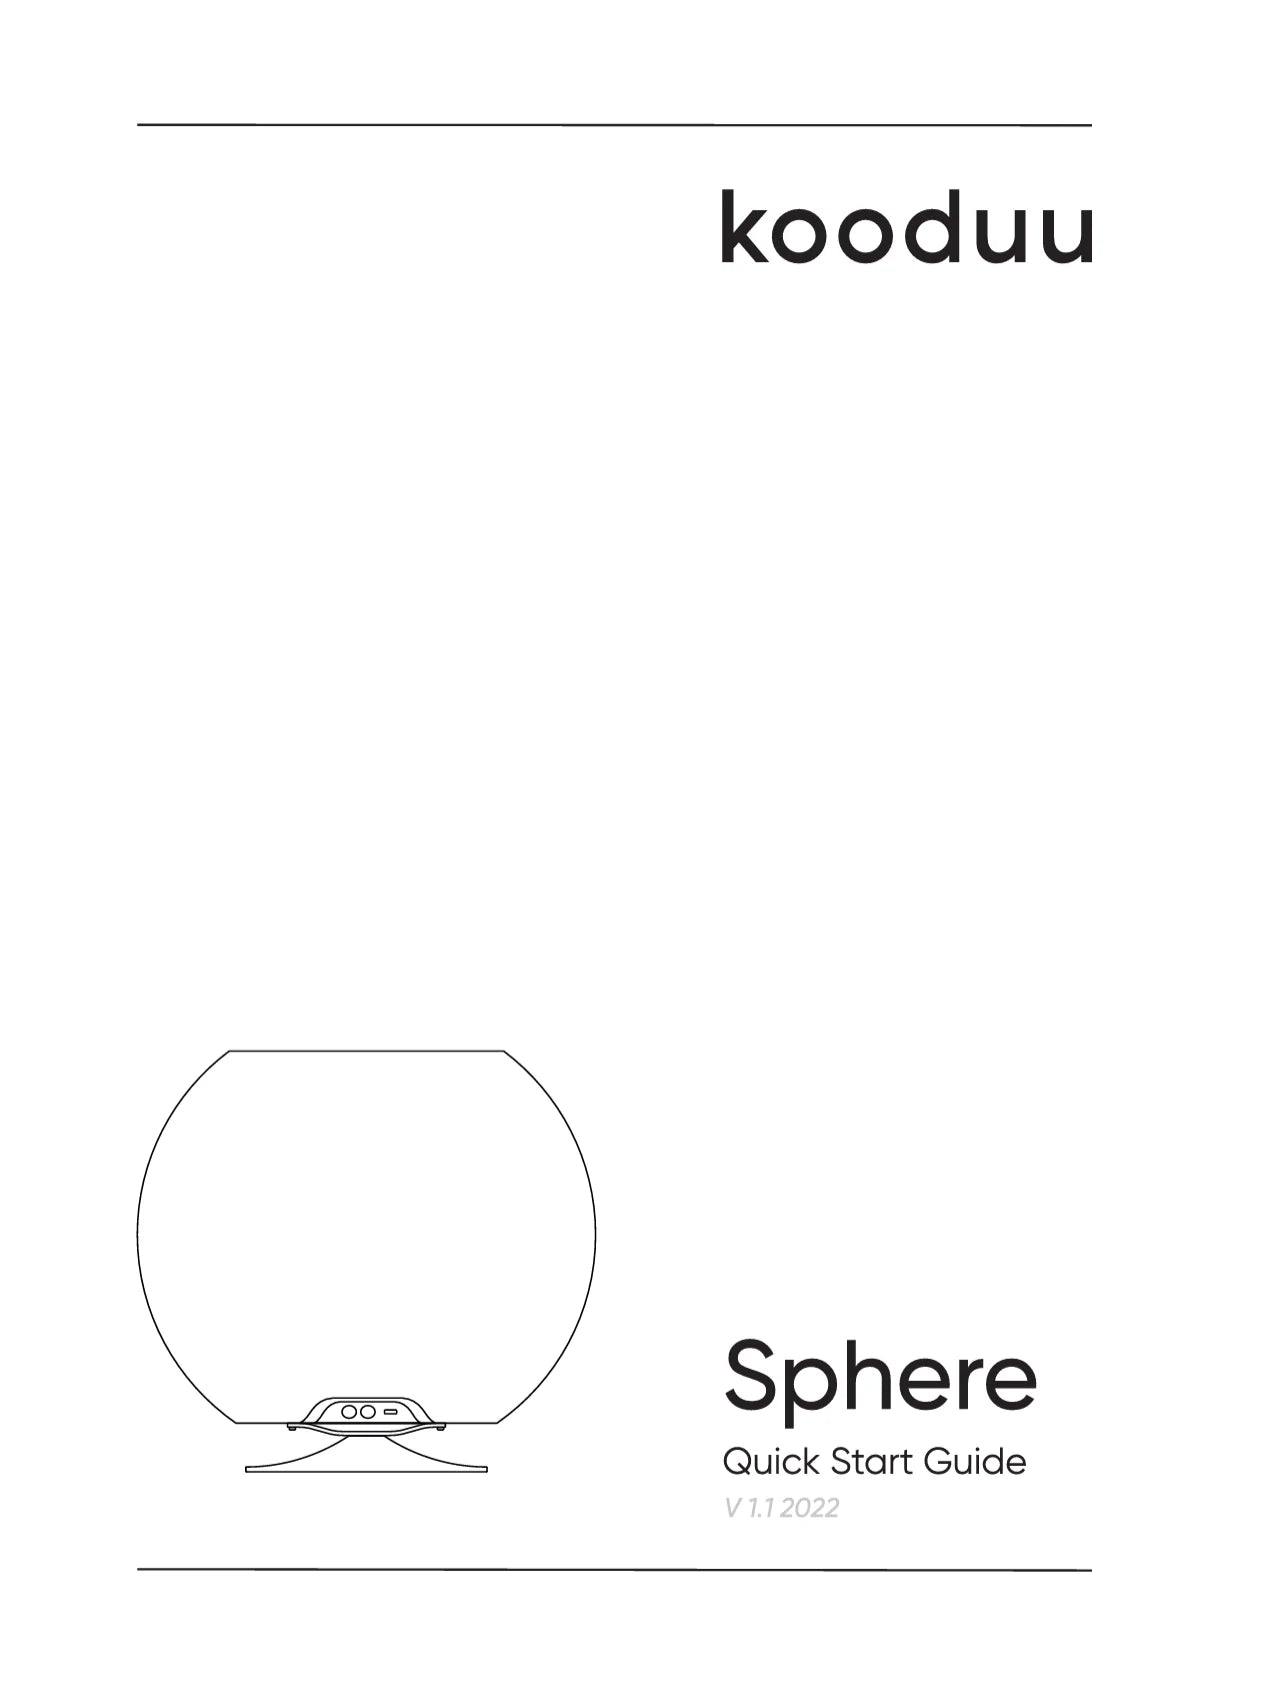 Manual title for Kooduu Sphere lamps models 